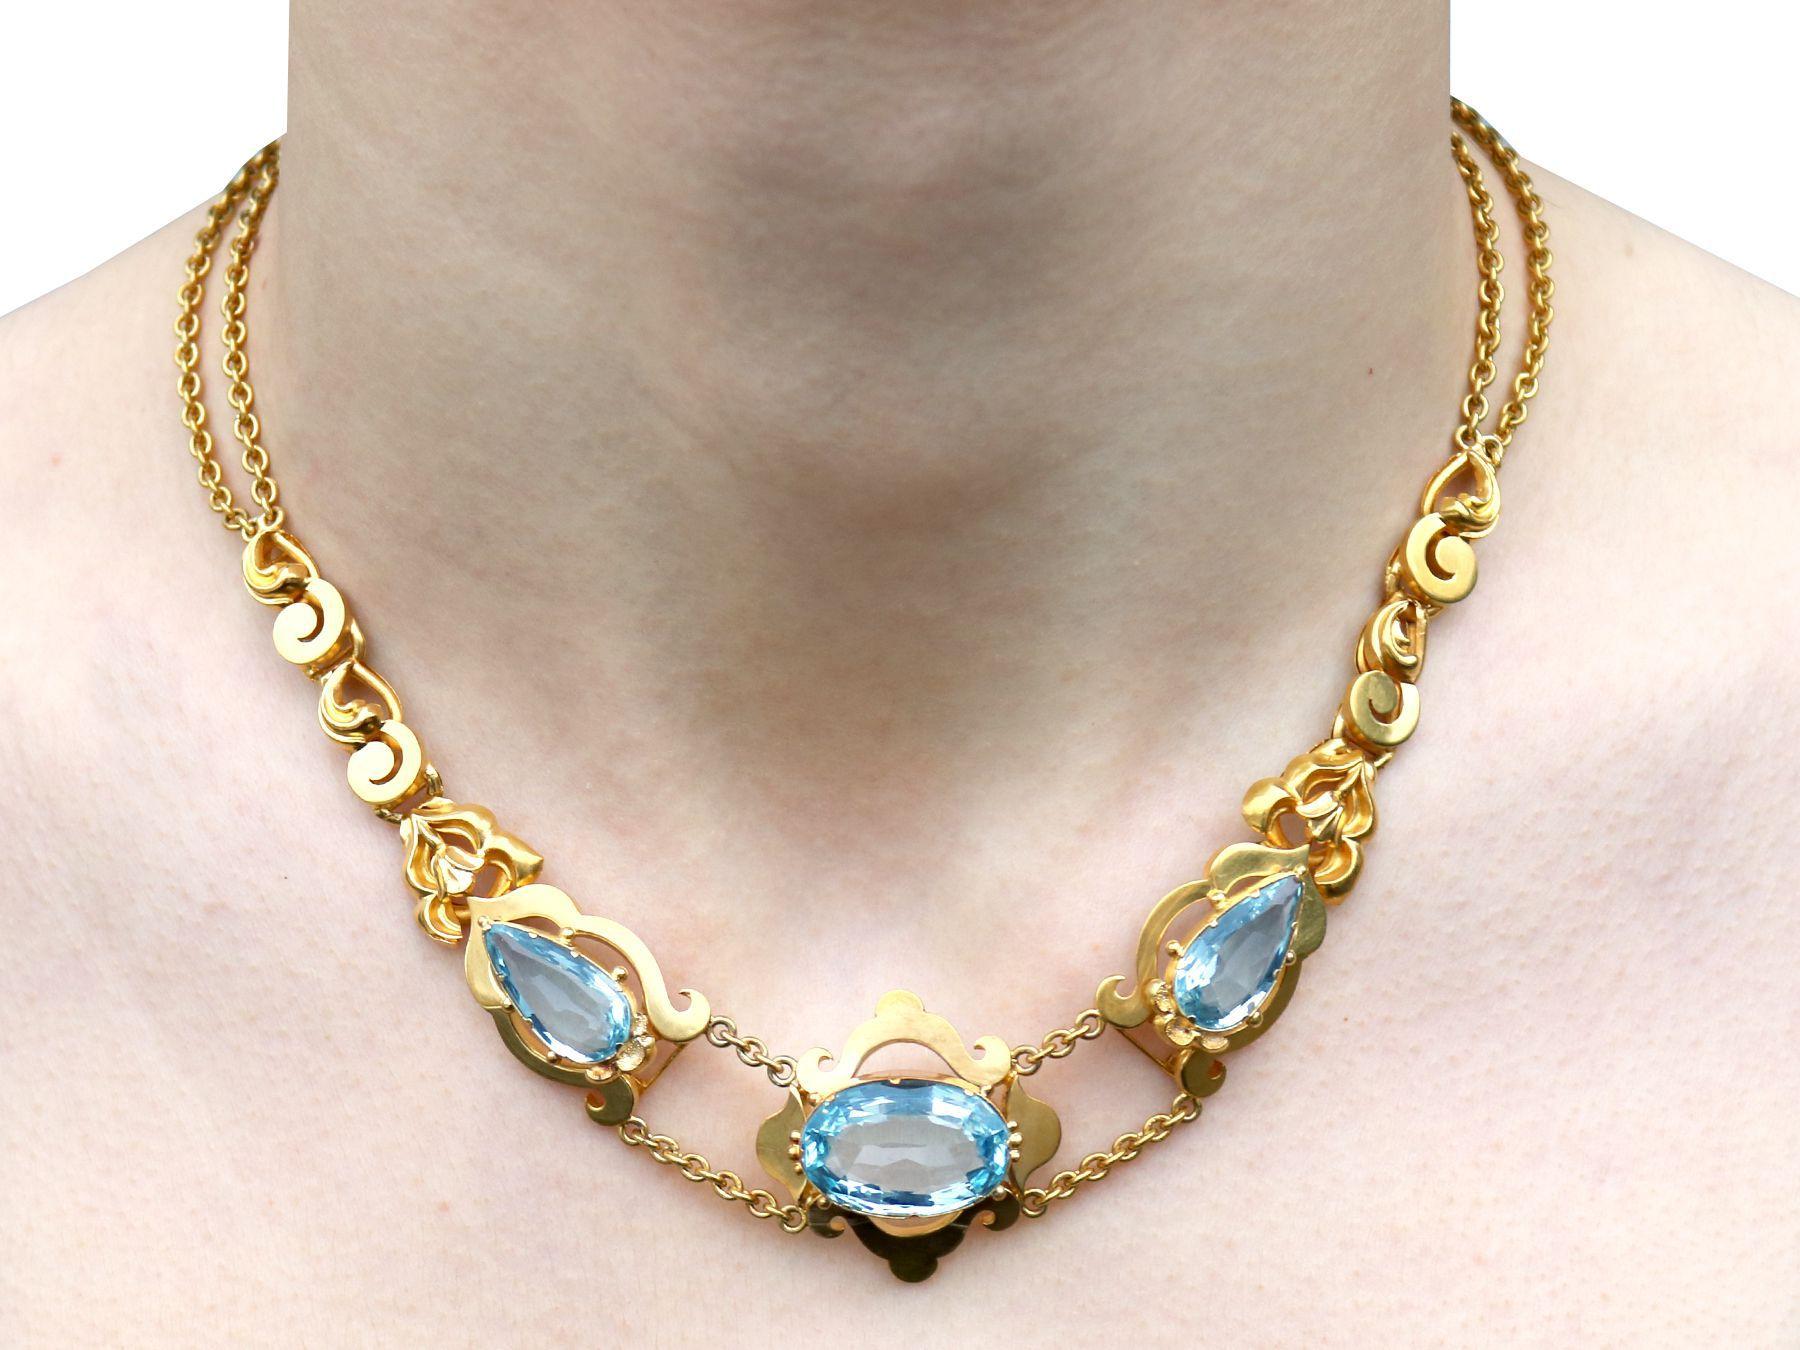 Antique 23.72ct Aquamarine and Yellow Gold Necklace Circa 1850 2